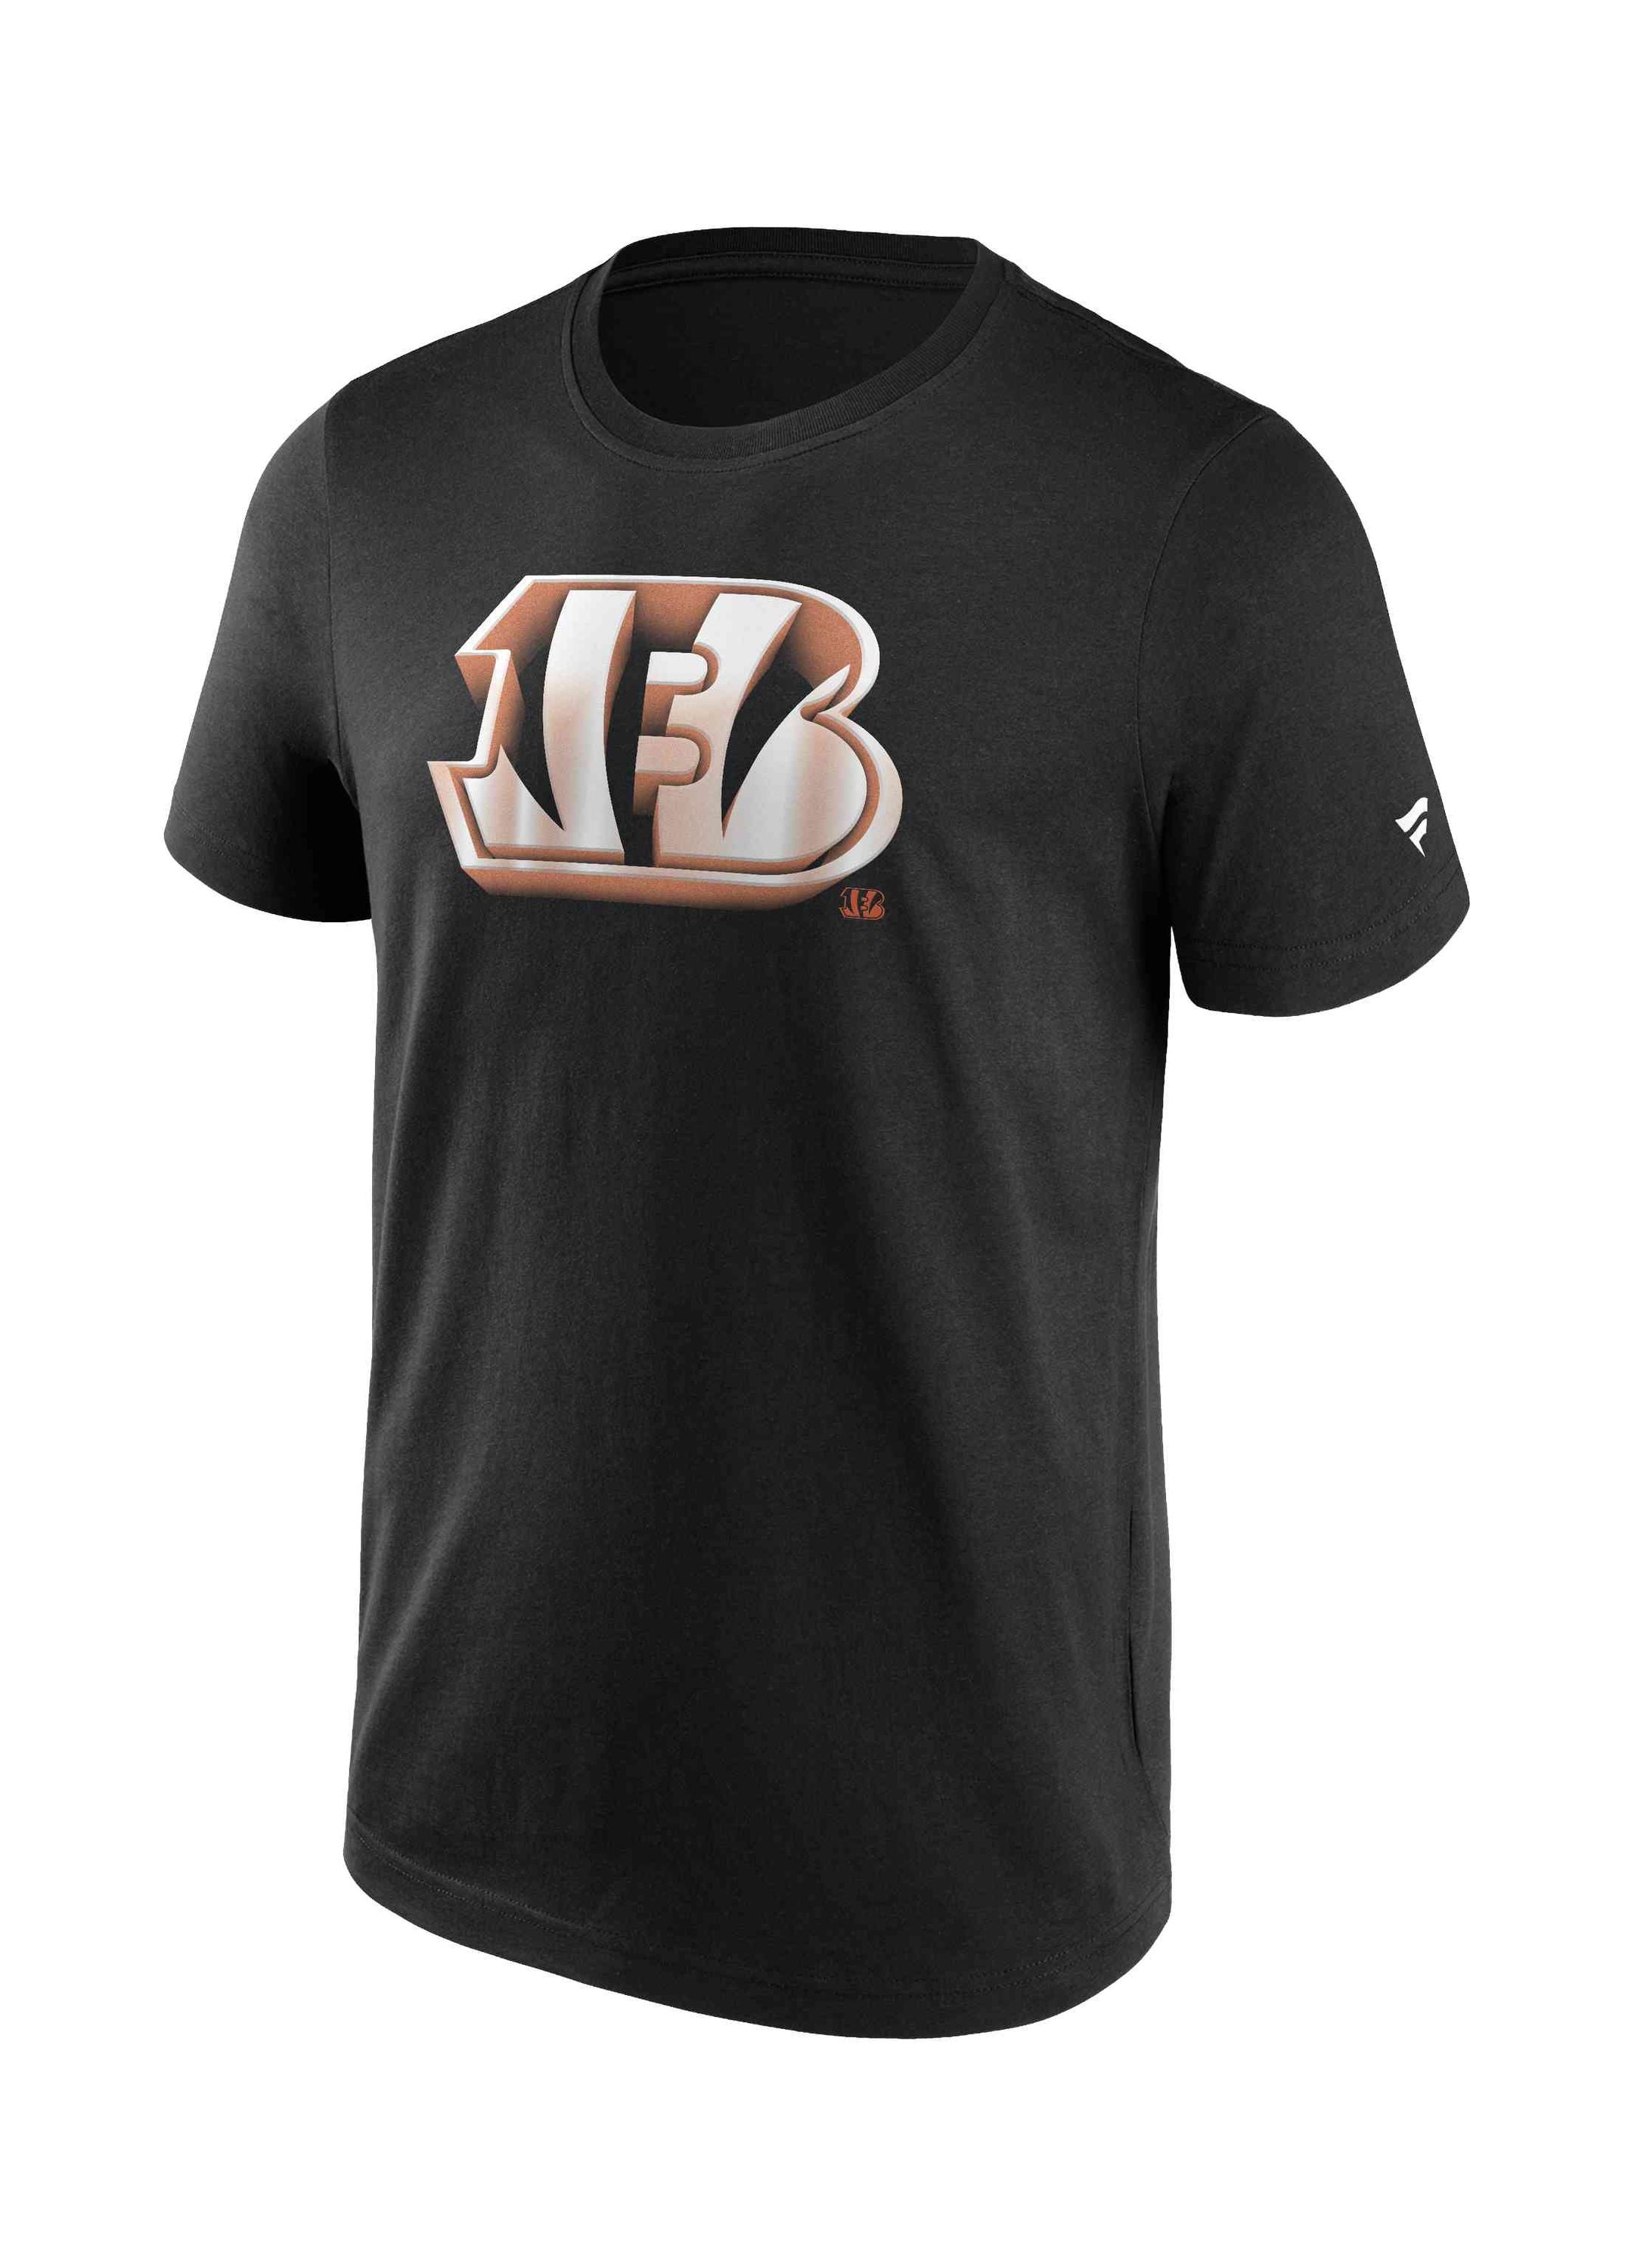 Fanatics - NFL Cincinnati Bengals Chrome Graphic T-Shirt